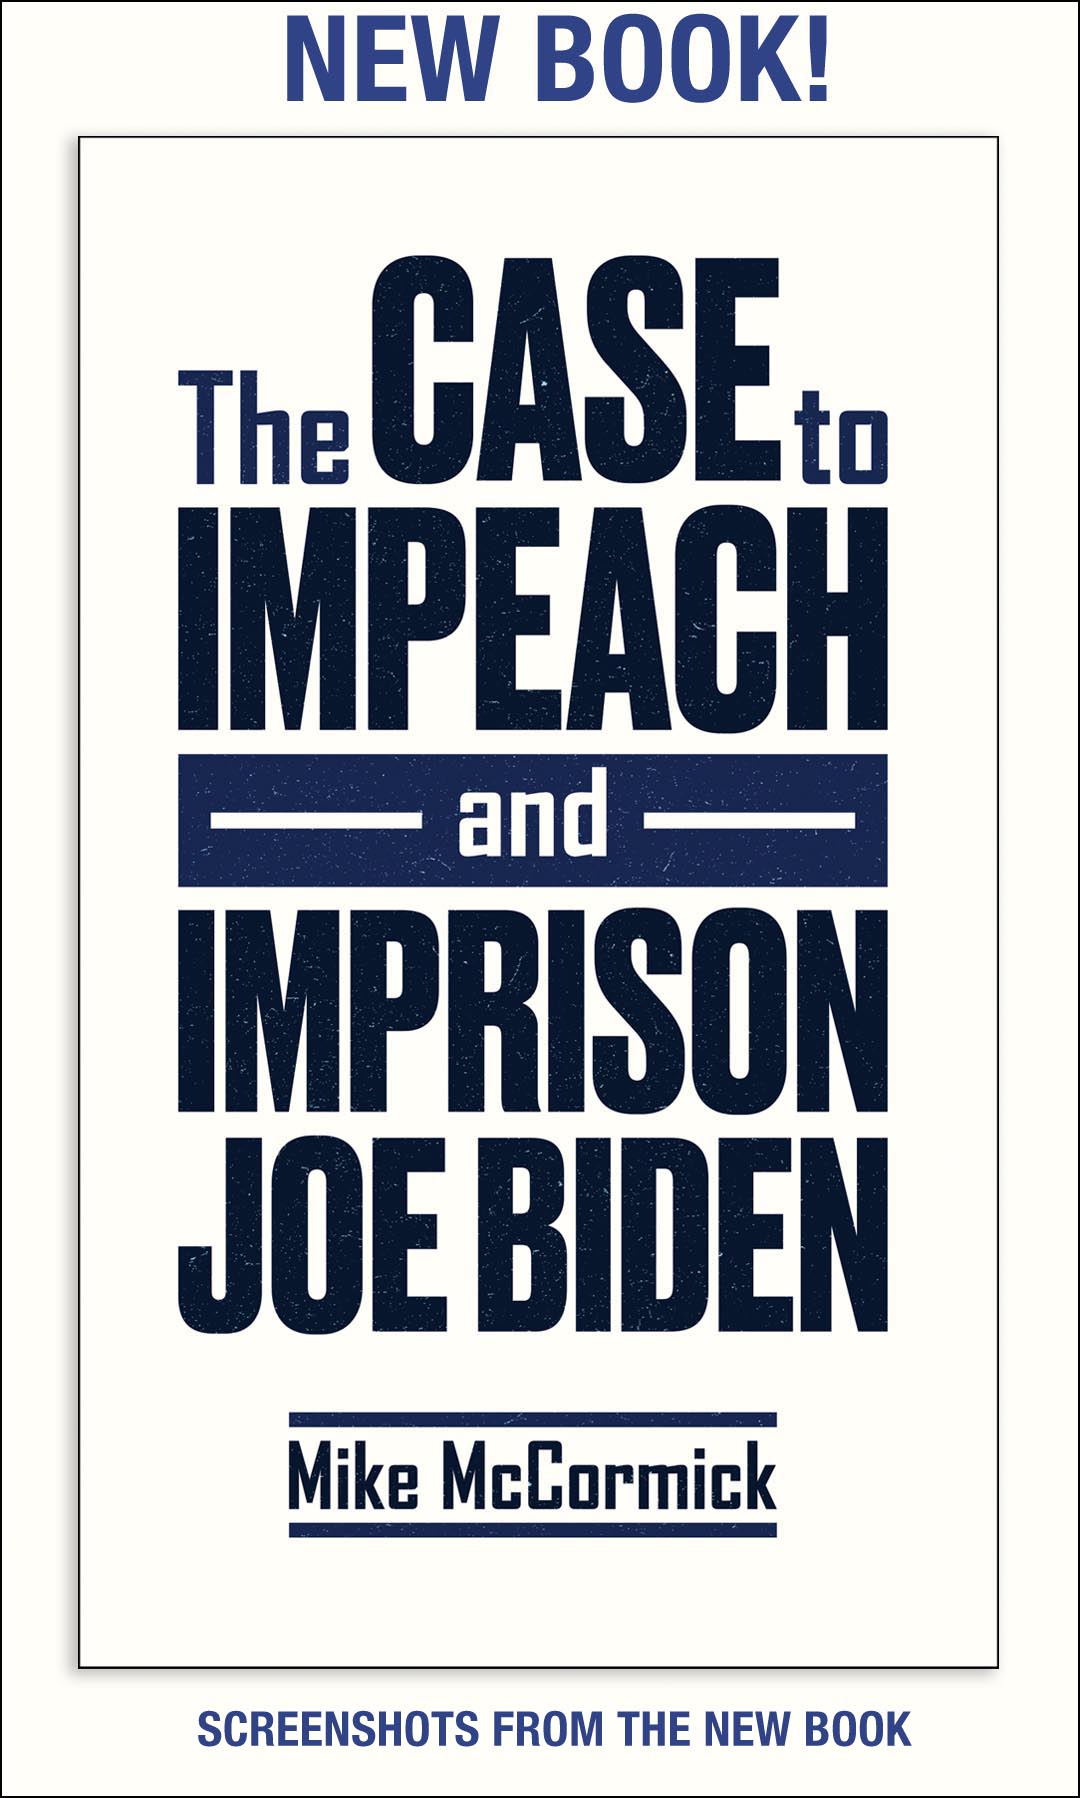 The Case to Impeach Joe Biden